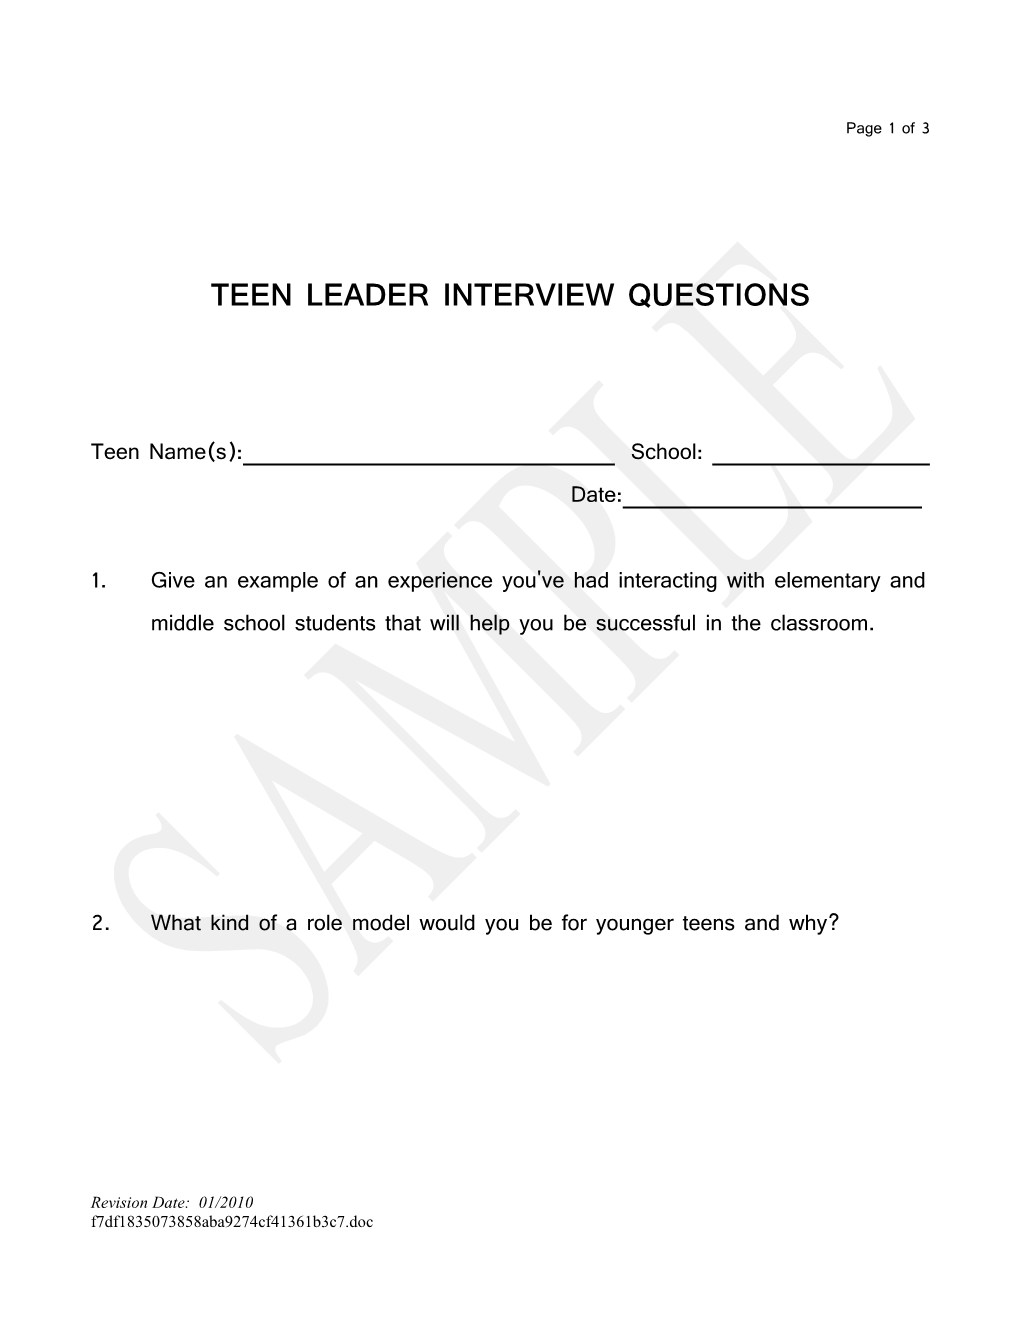 Teen Leader Interview Questions